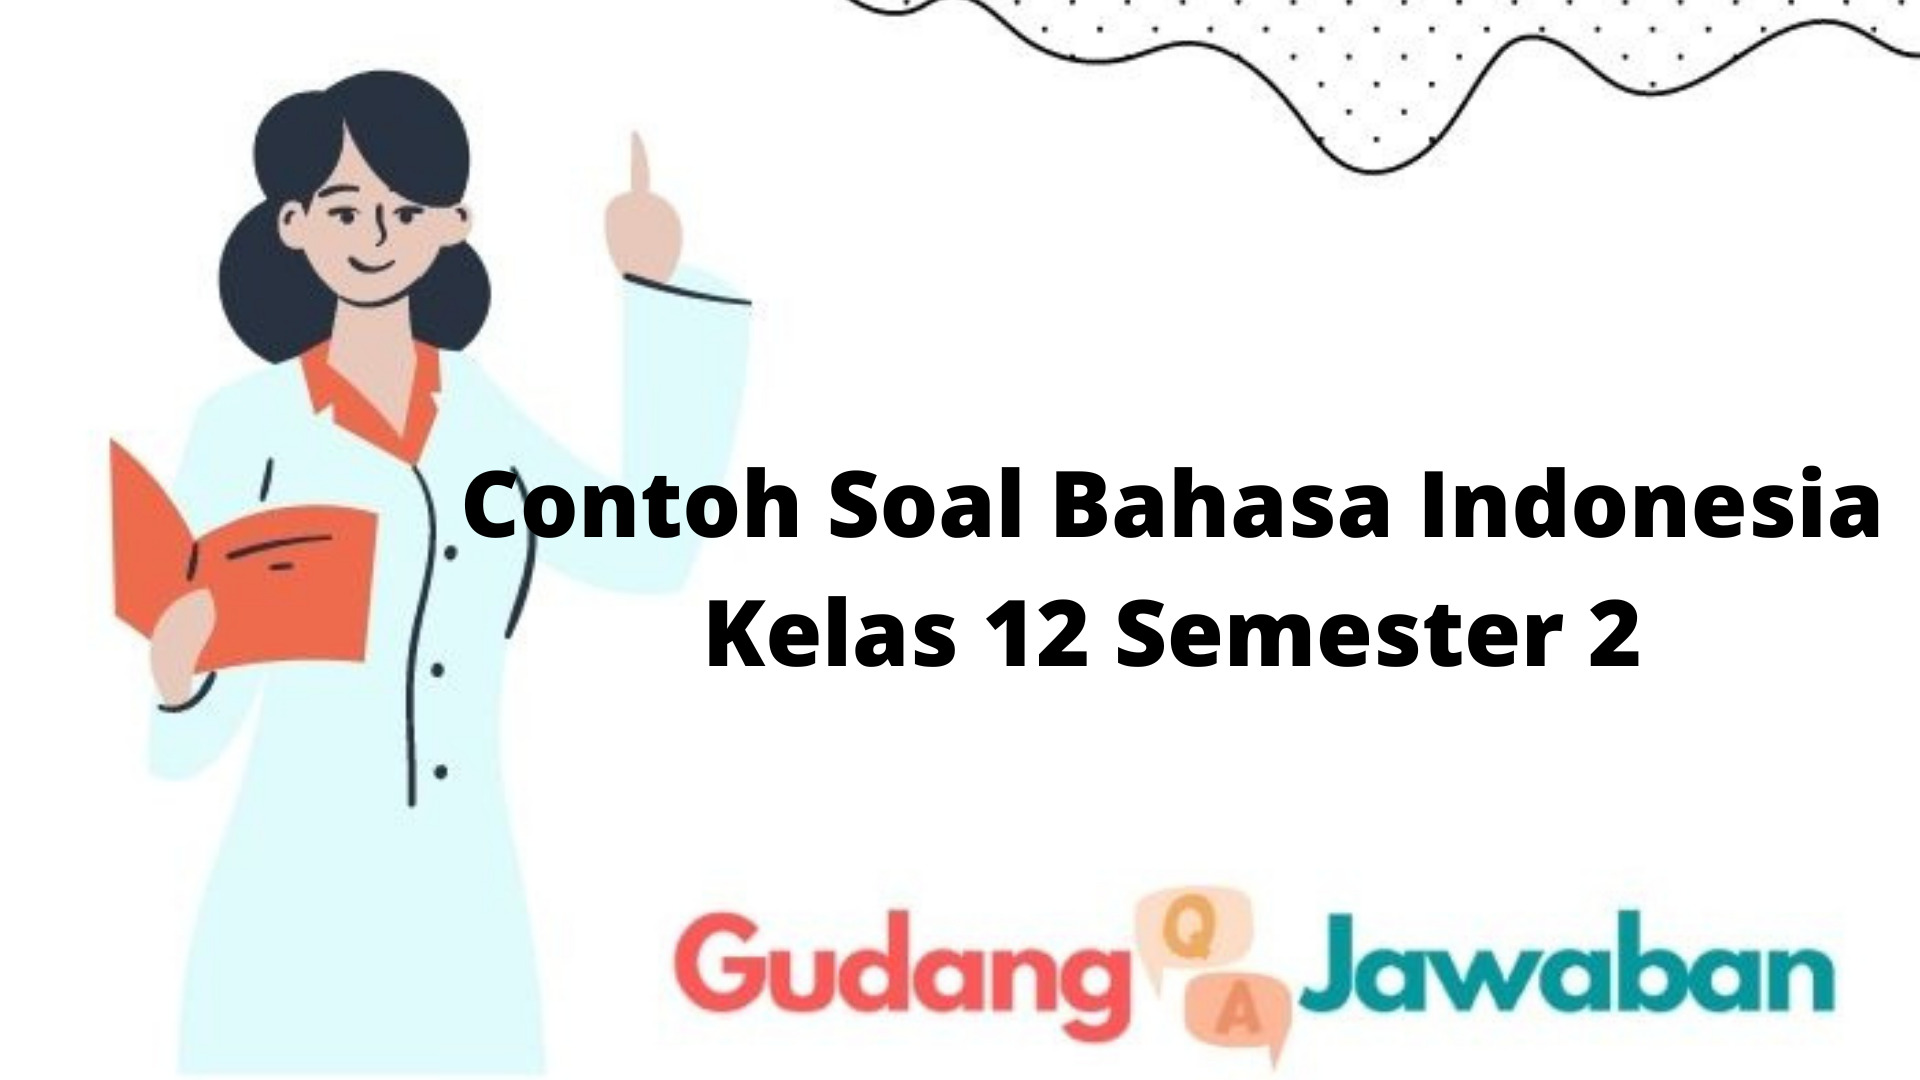 Contoh Soal Bahasa Indonesia Kelas 12 Semester 2